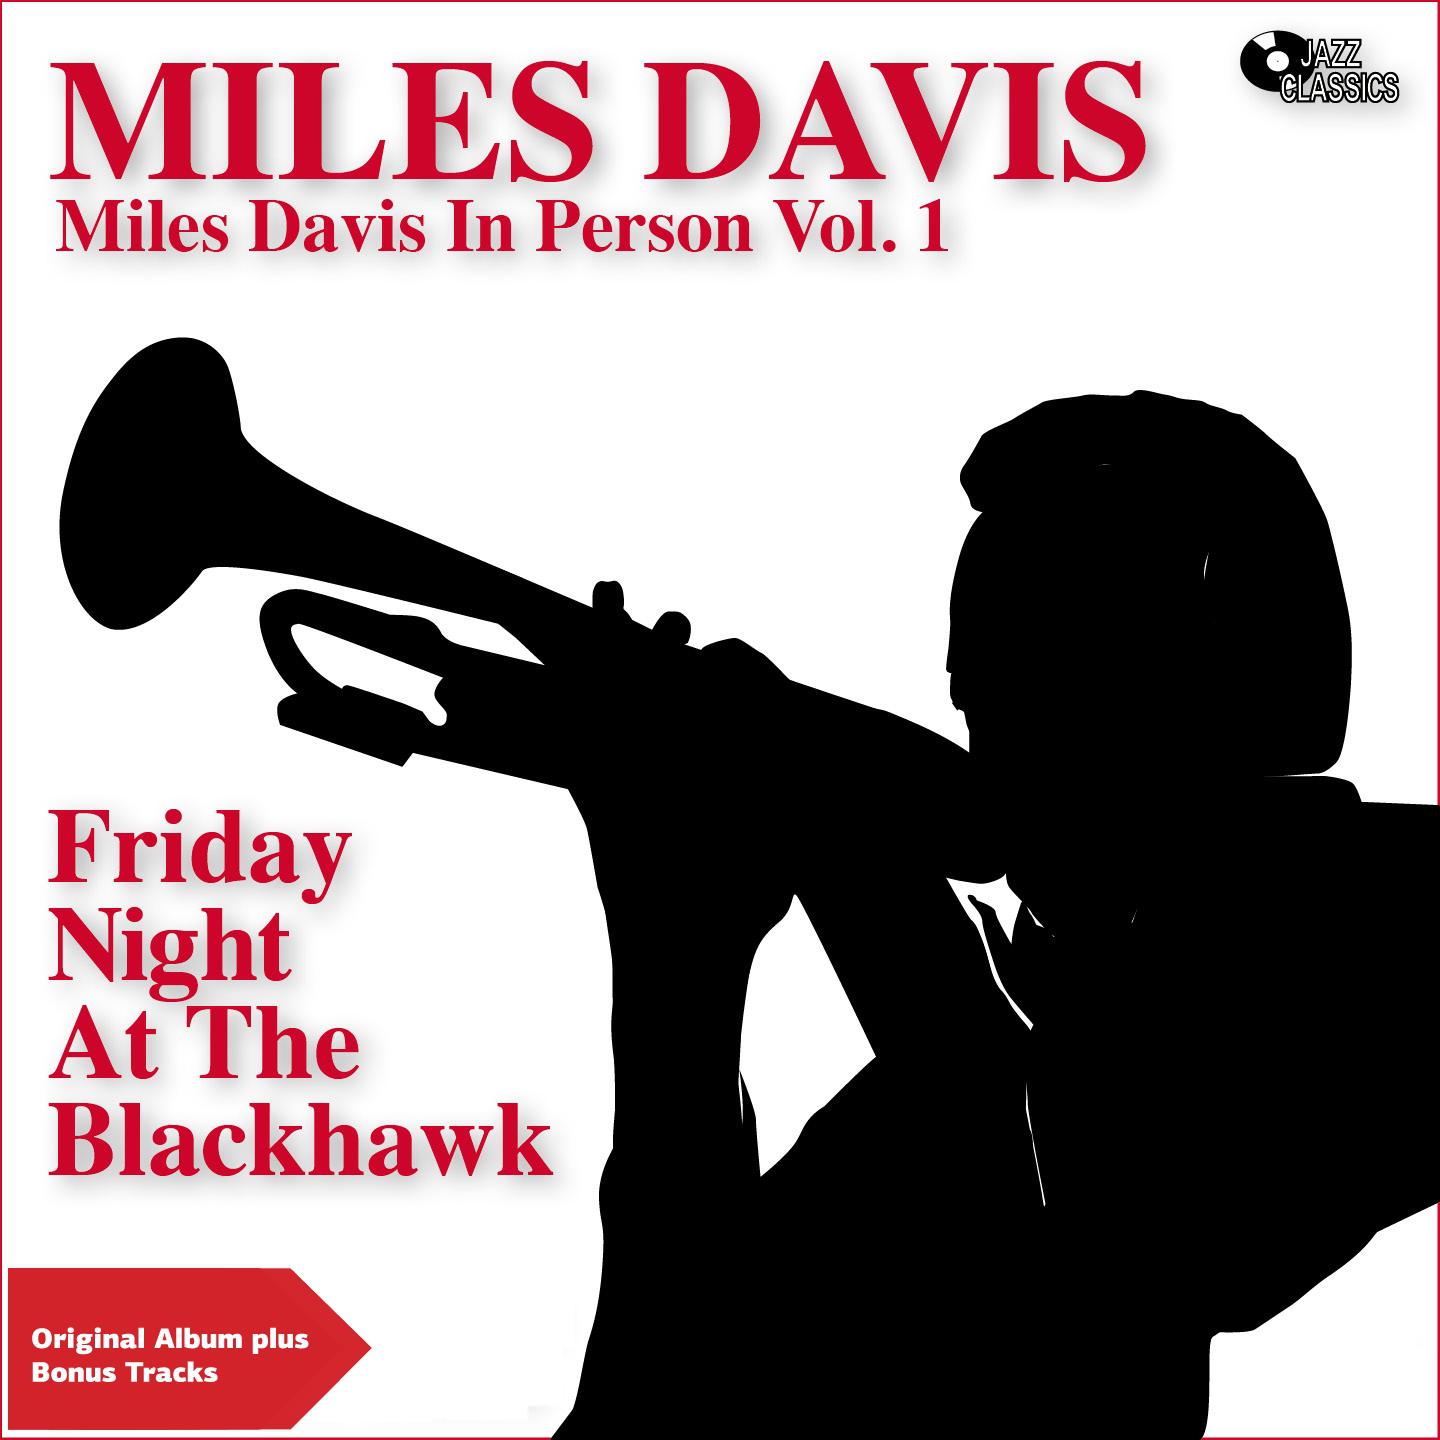 Friday Night At the Blackhawk - Miles Davis in Person, Vol. 1